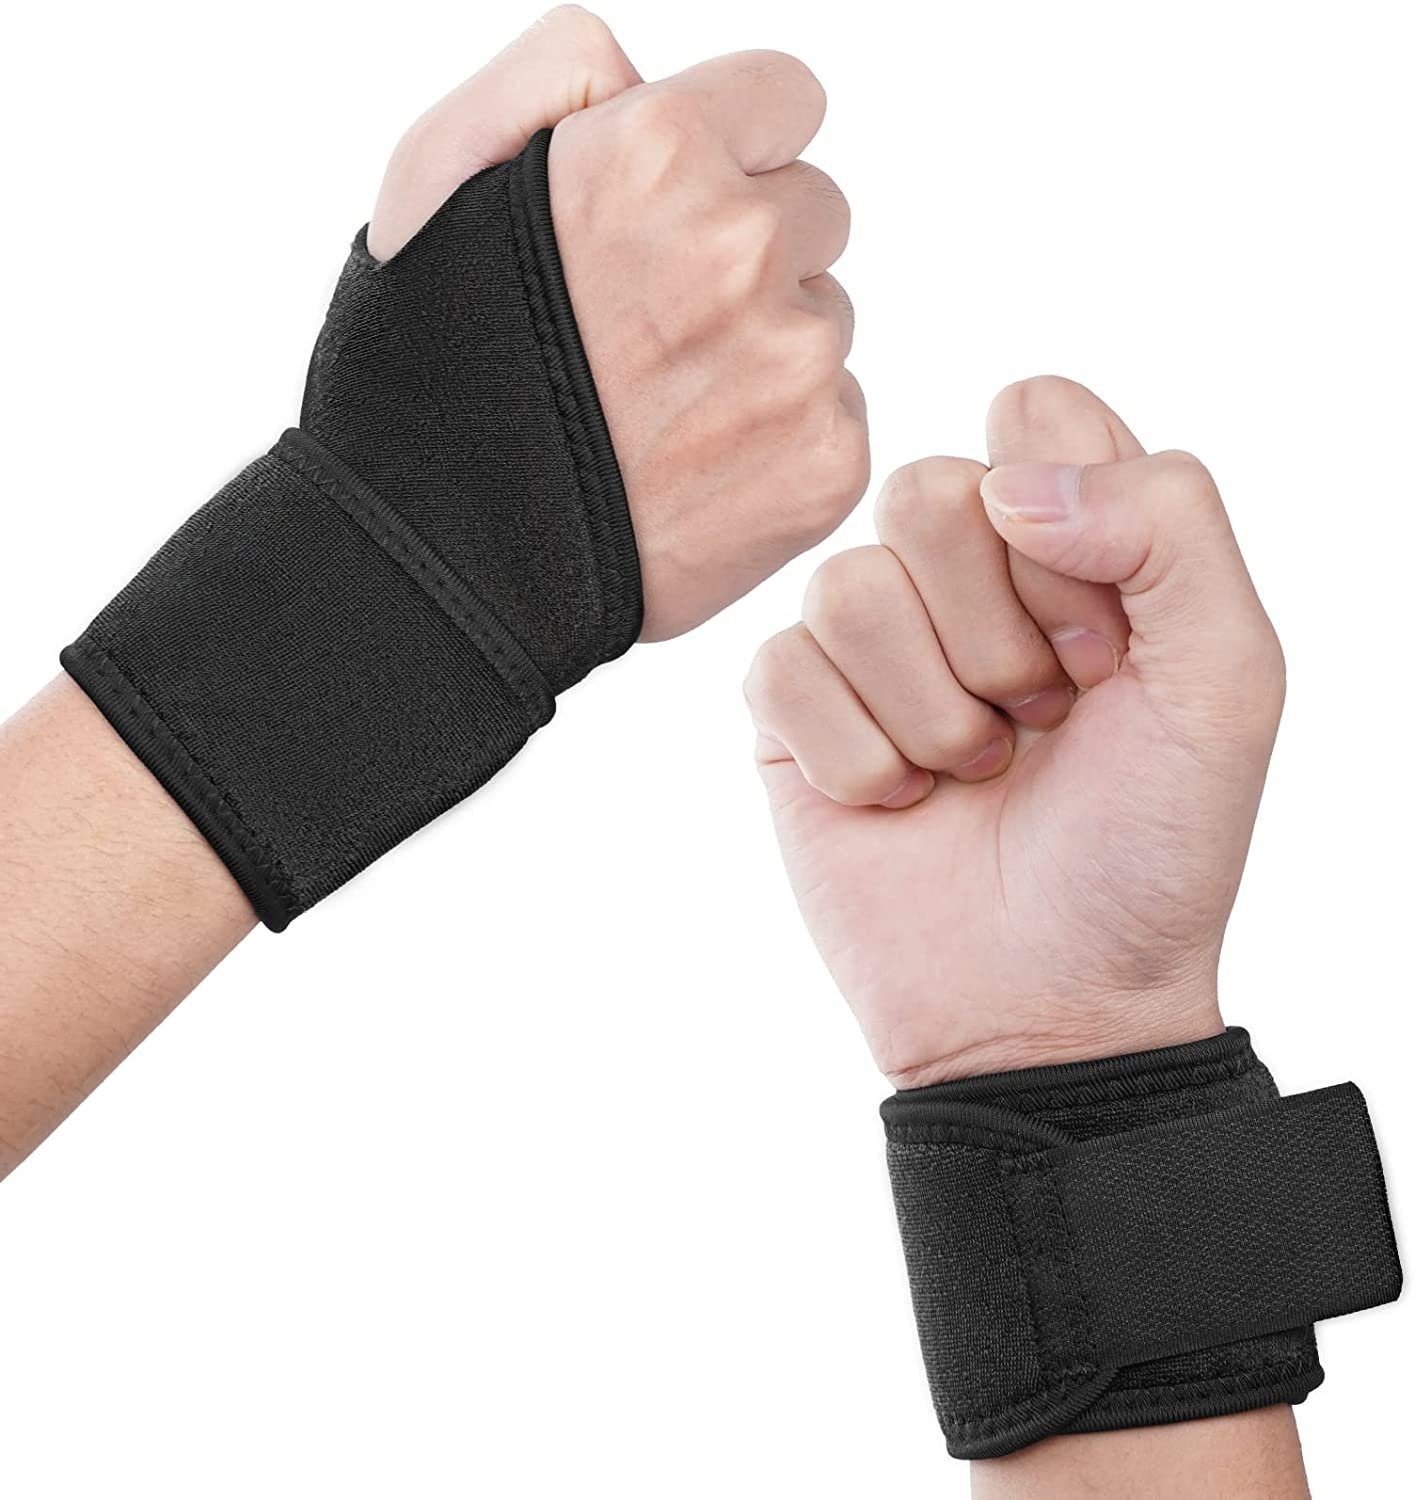 COOL-i ® Handgelenkbandage, 2PCS Handgelenkbandage Einstellbare Atmungsaktive Handgelenkschoner für Fitness, Handgelenkstütze, Bodybuilding, Kraftsport.